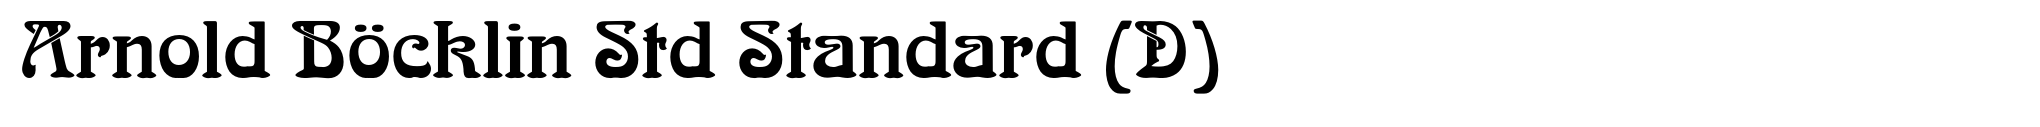 Arnold Böcklin Std Standard (D) image